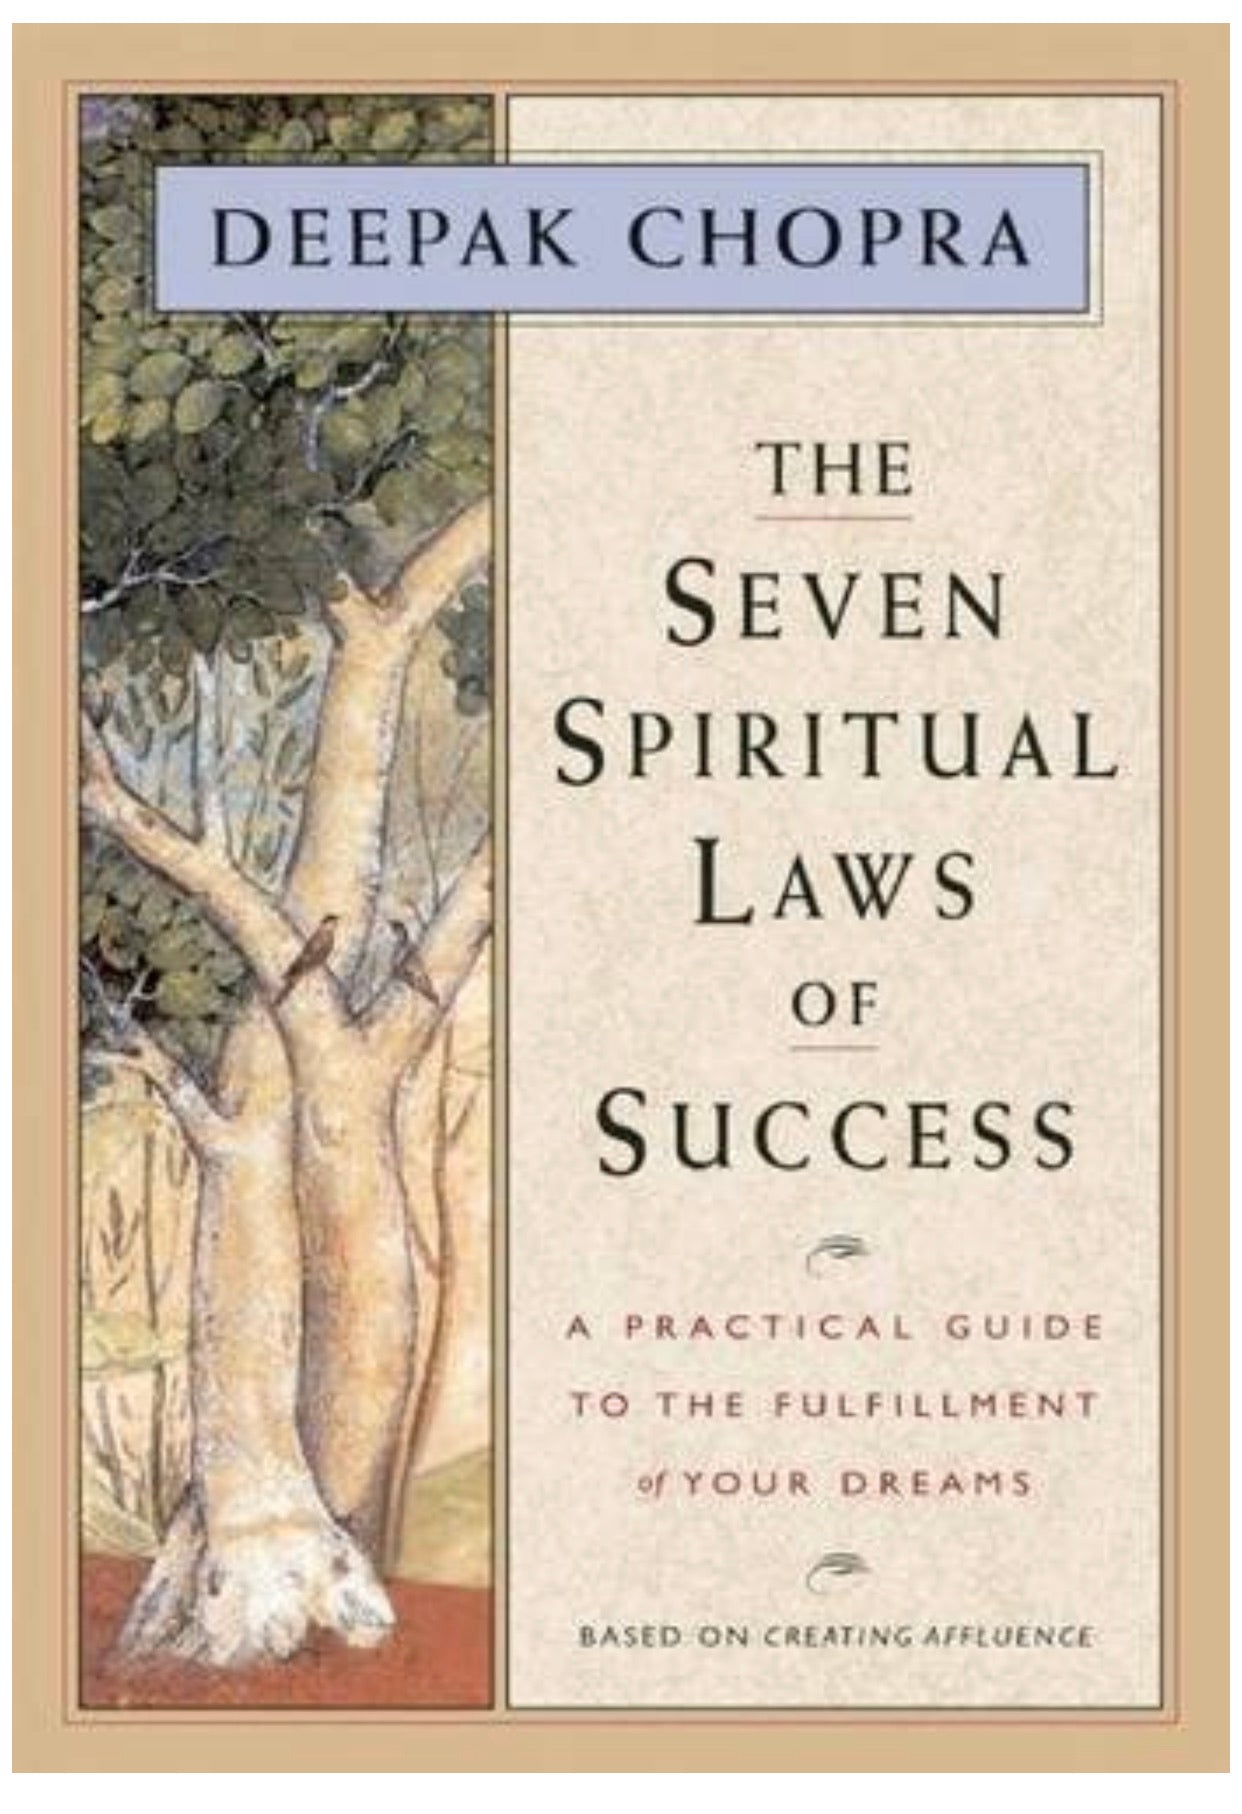 The 7 Spiritual Laws of Success